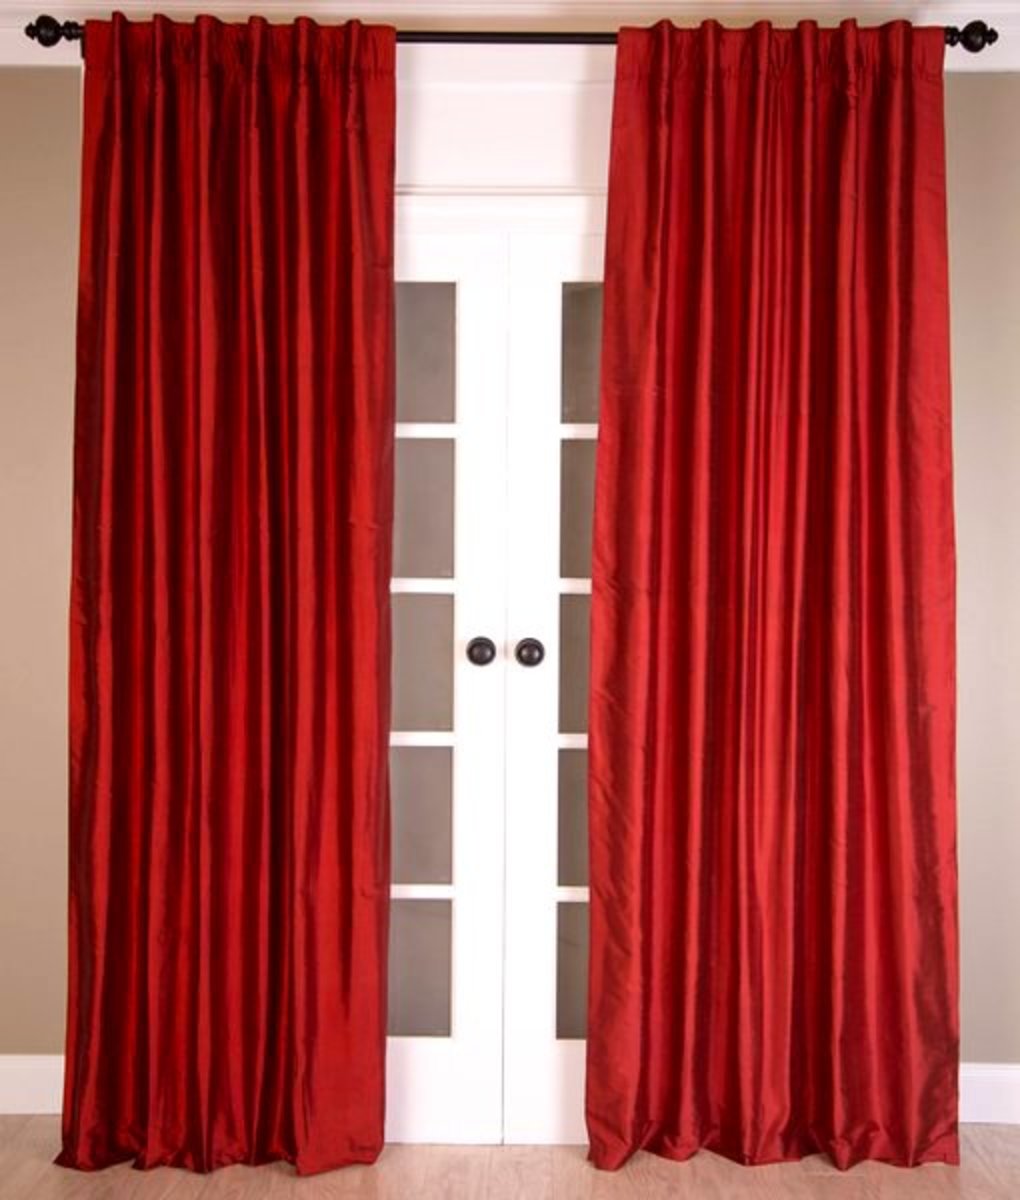 Image result for HOT SILK TAFFETA fabric curtain